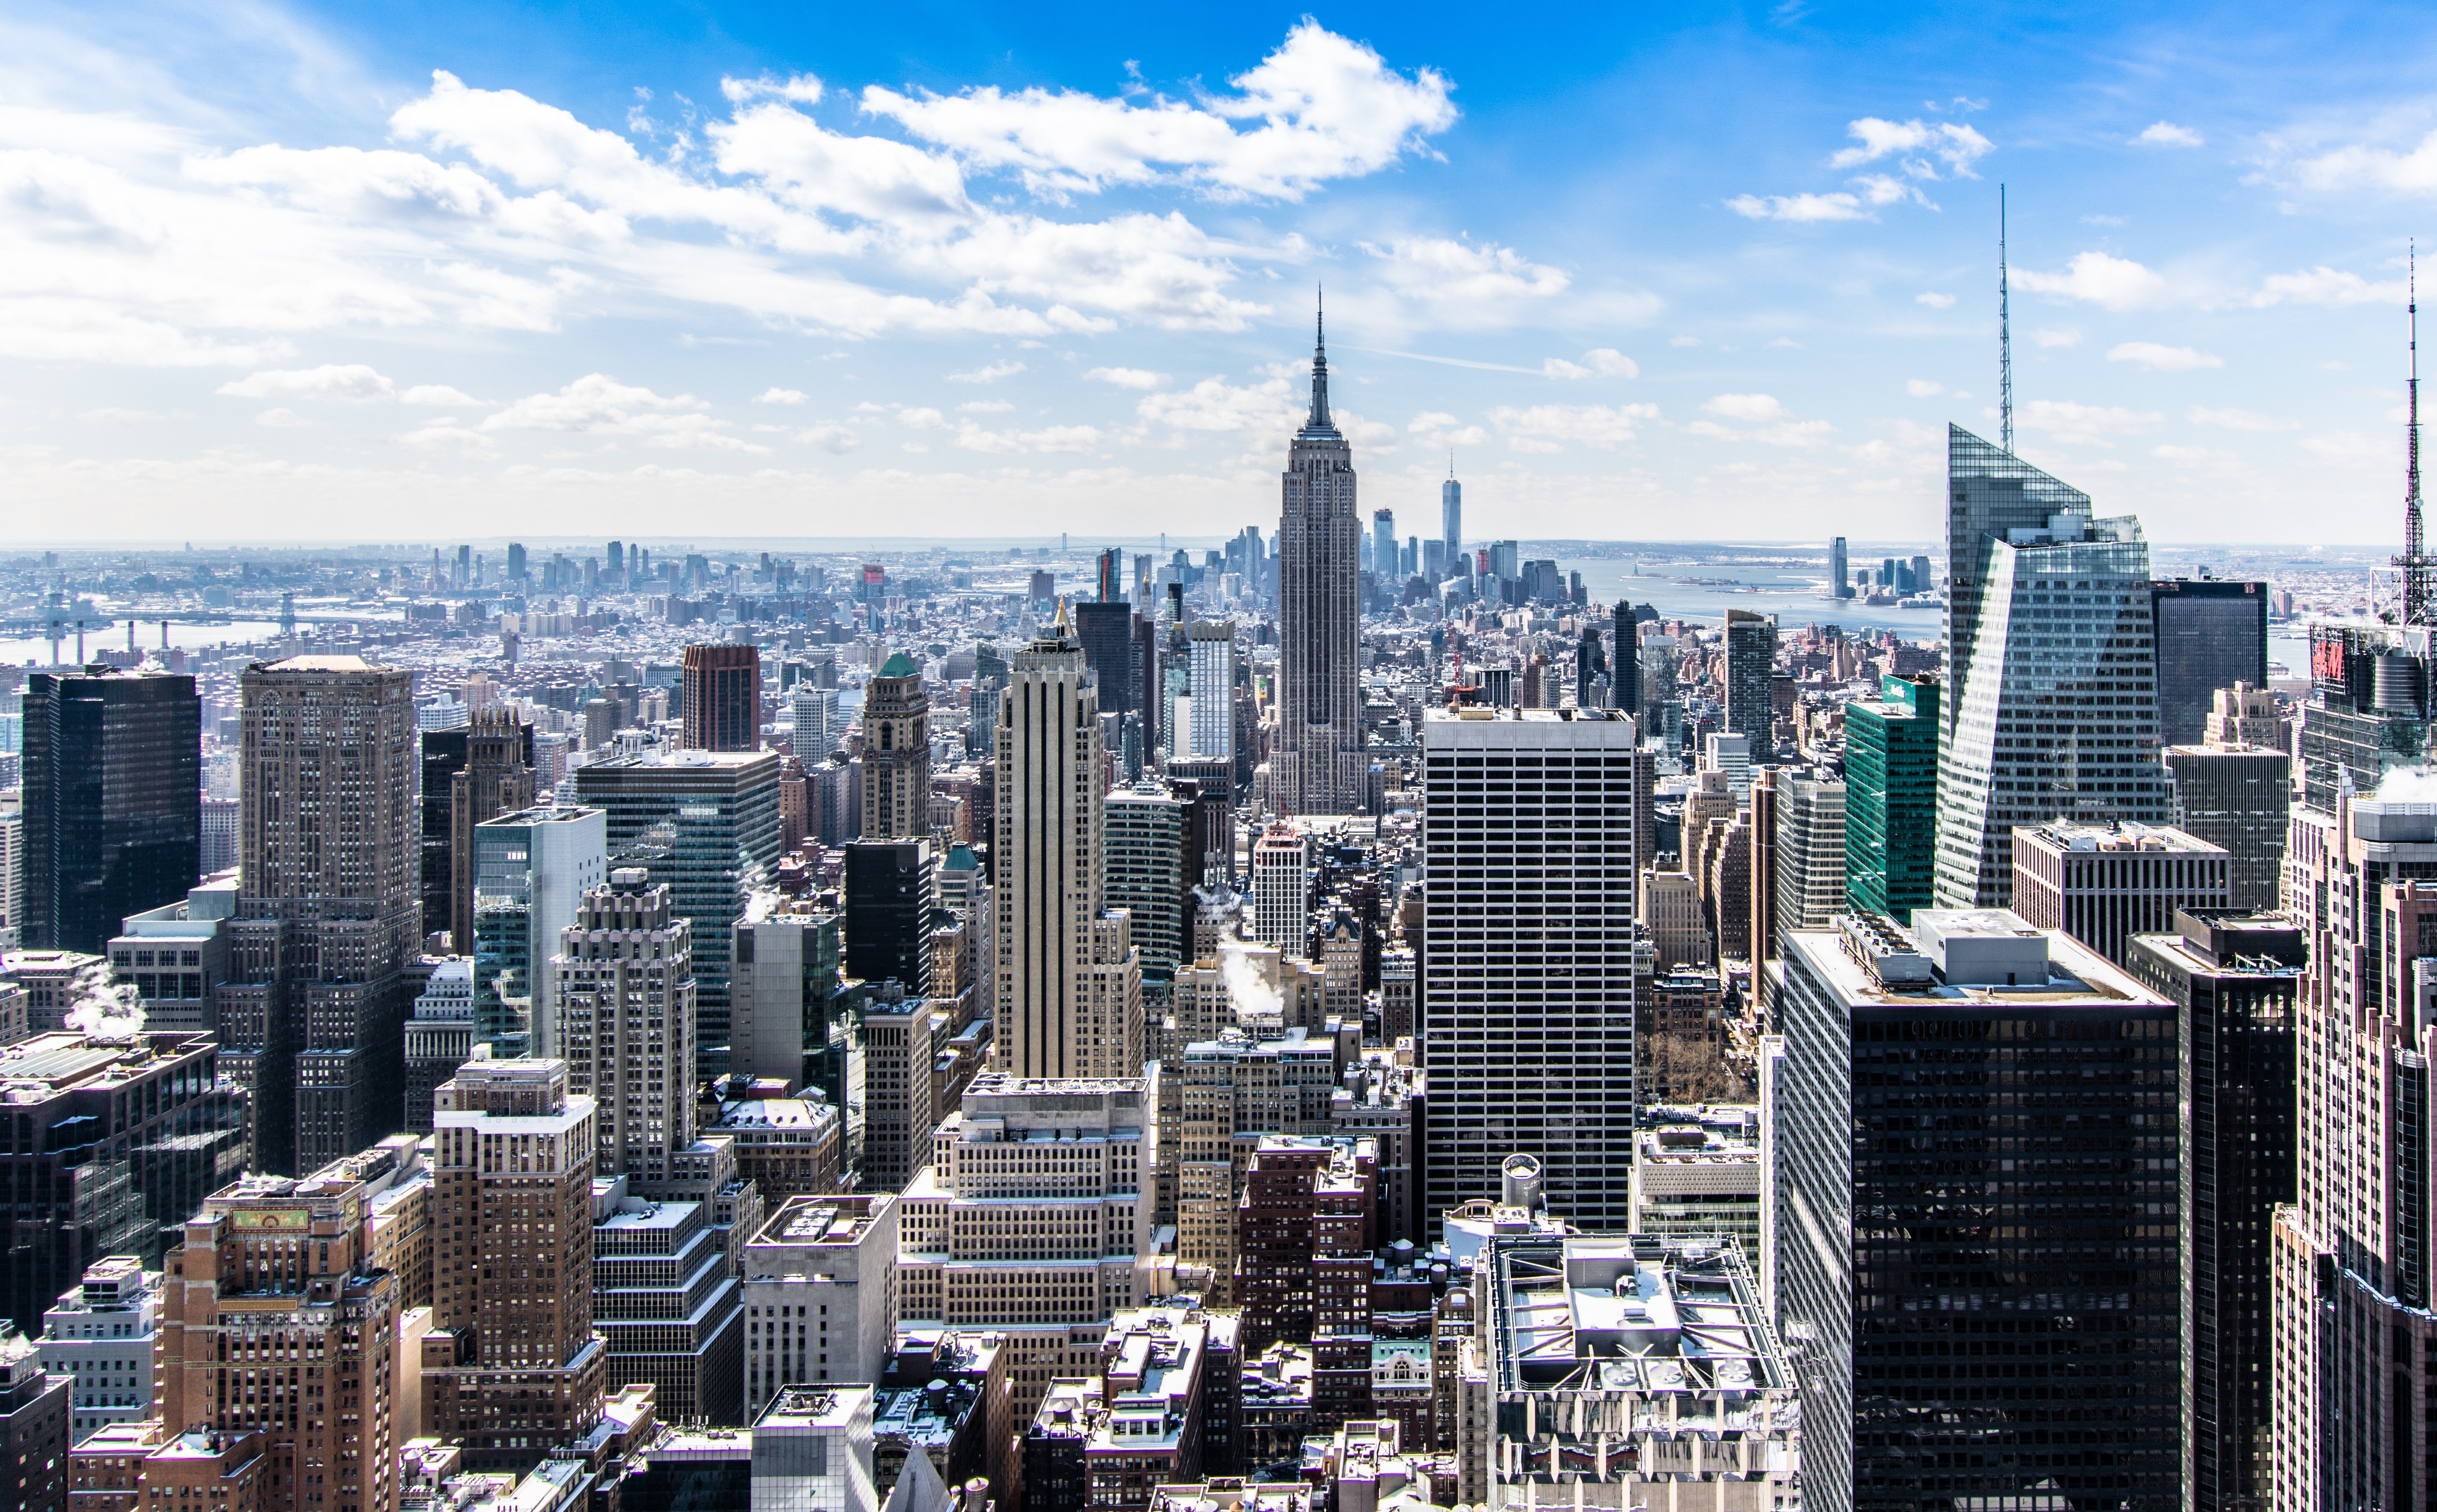 Panoramic view of New York City. | Source: Pexels/Lukas Kloeppel